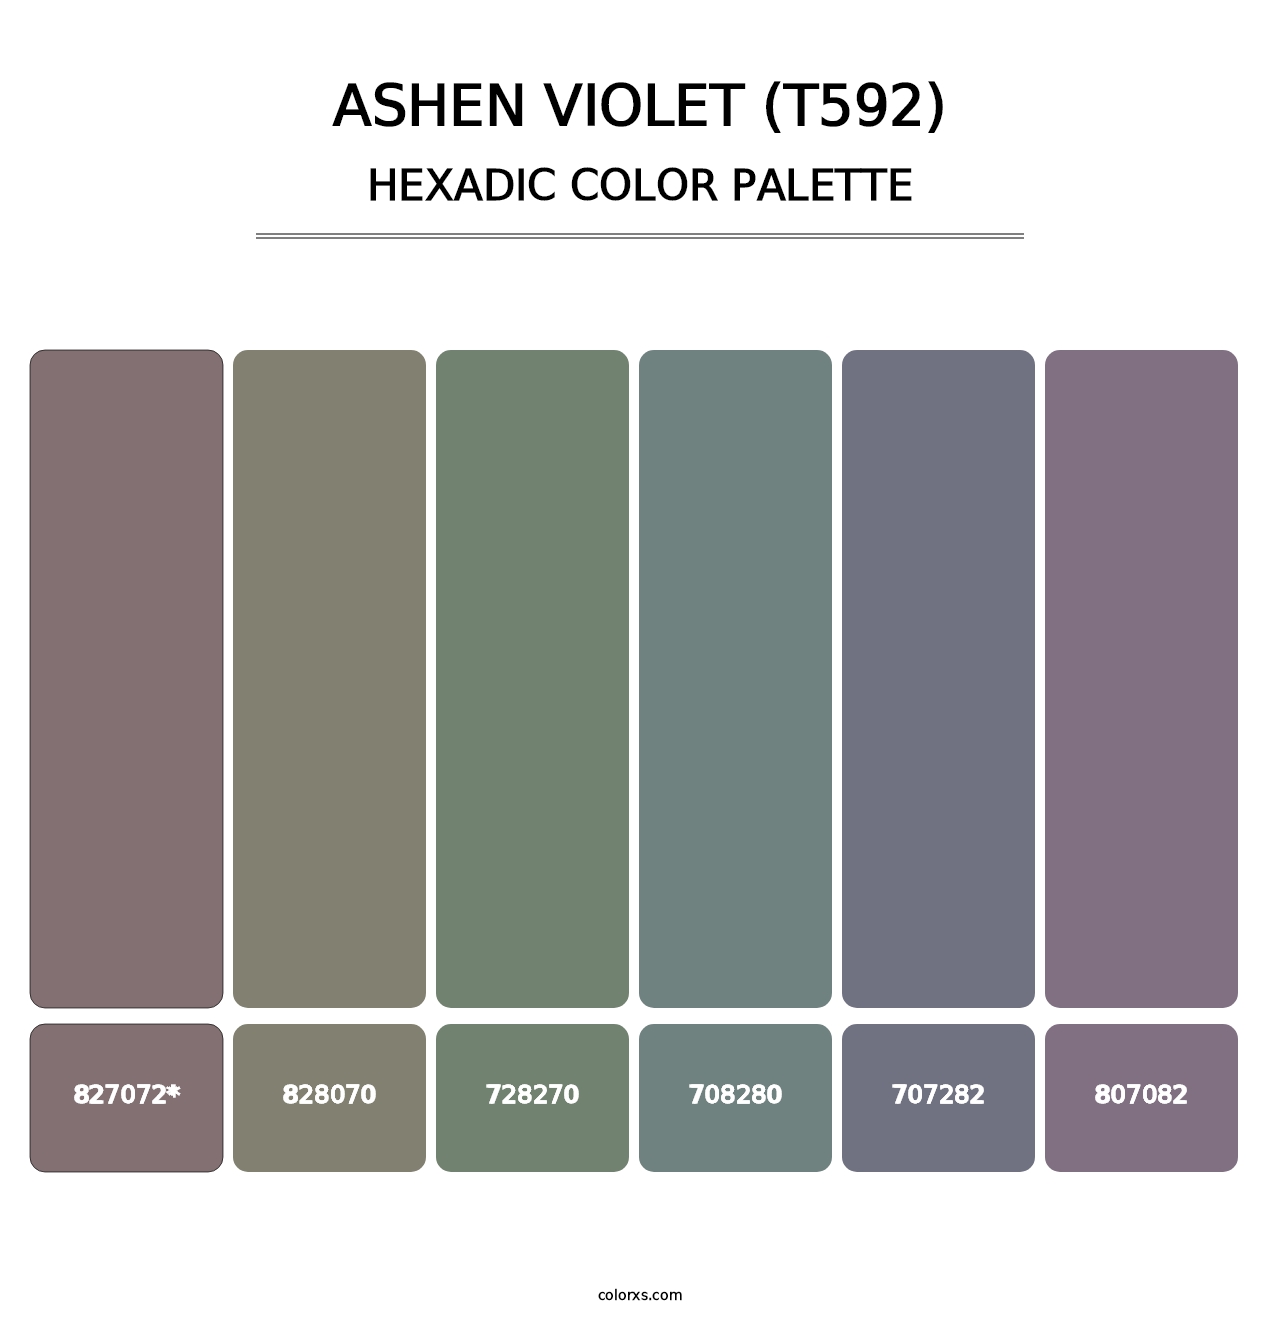 Ashen Violet (T592) - Hexadic Color Palette